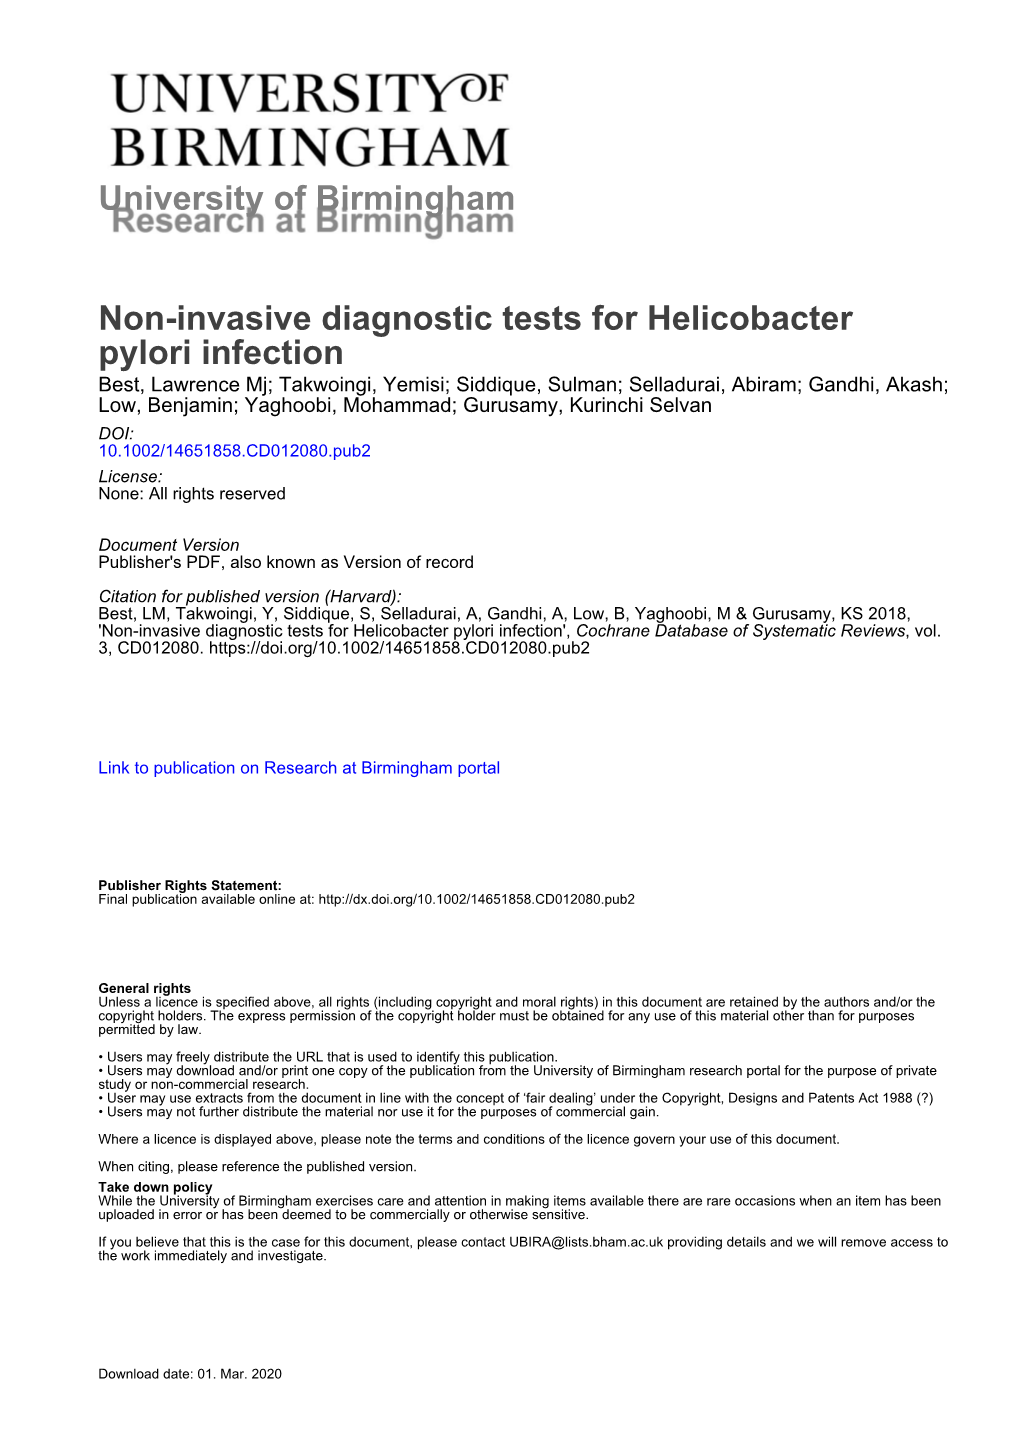 University of Birmingham Non-Invasive Diagnostic Tests For